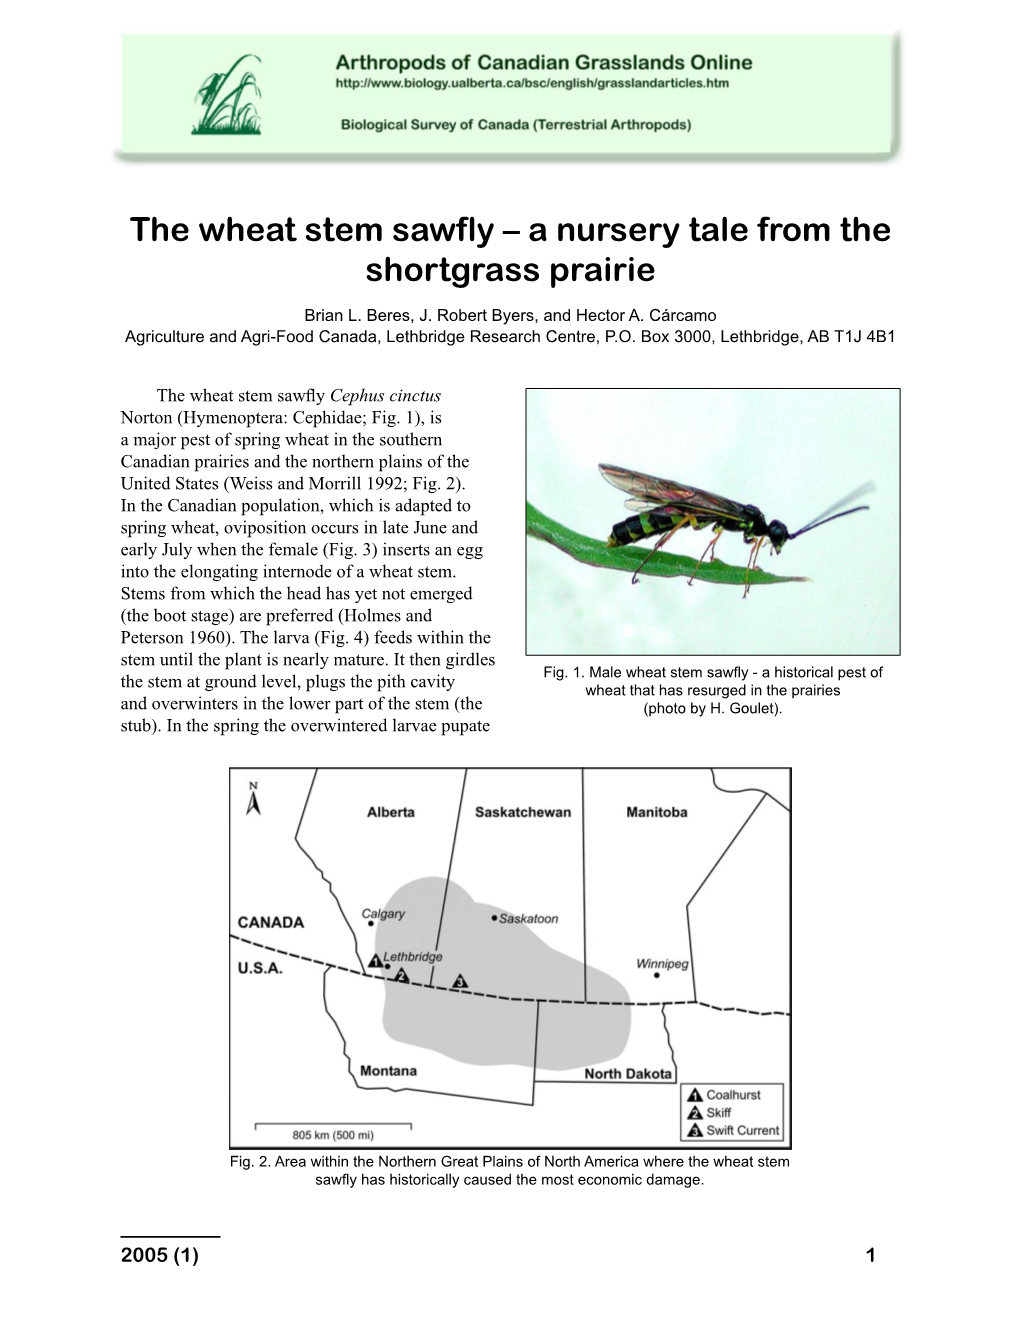 The Wheat Stem Sawfly – a Nursery Tale from the Shortgrass Prairie